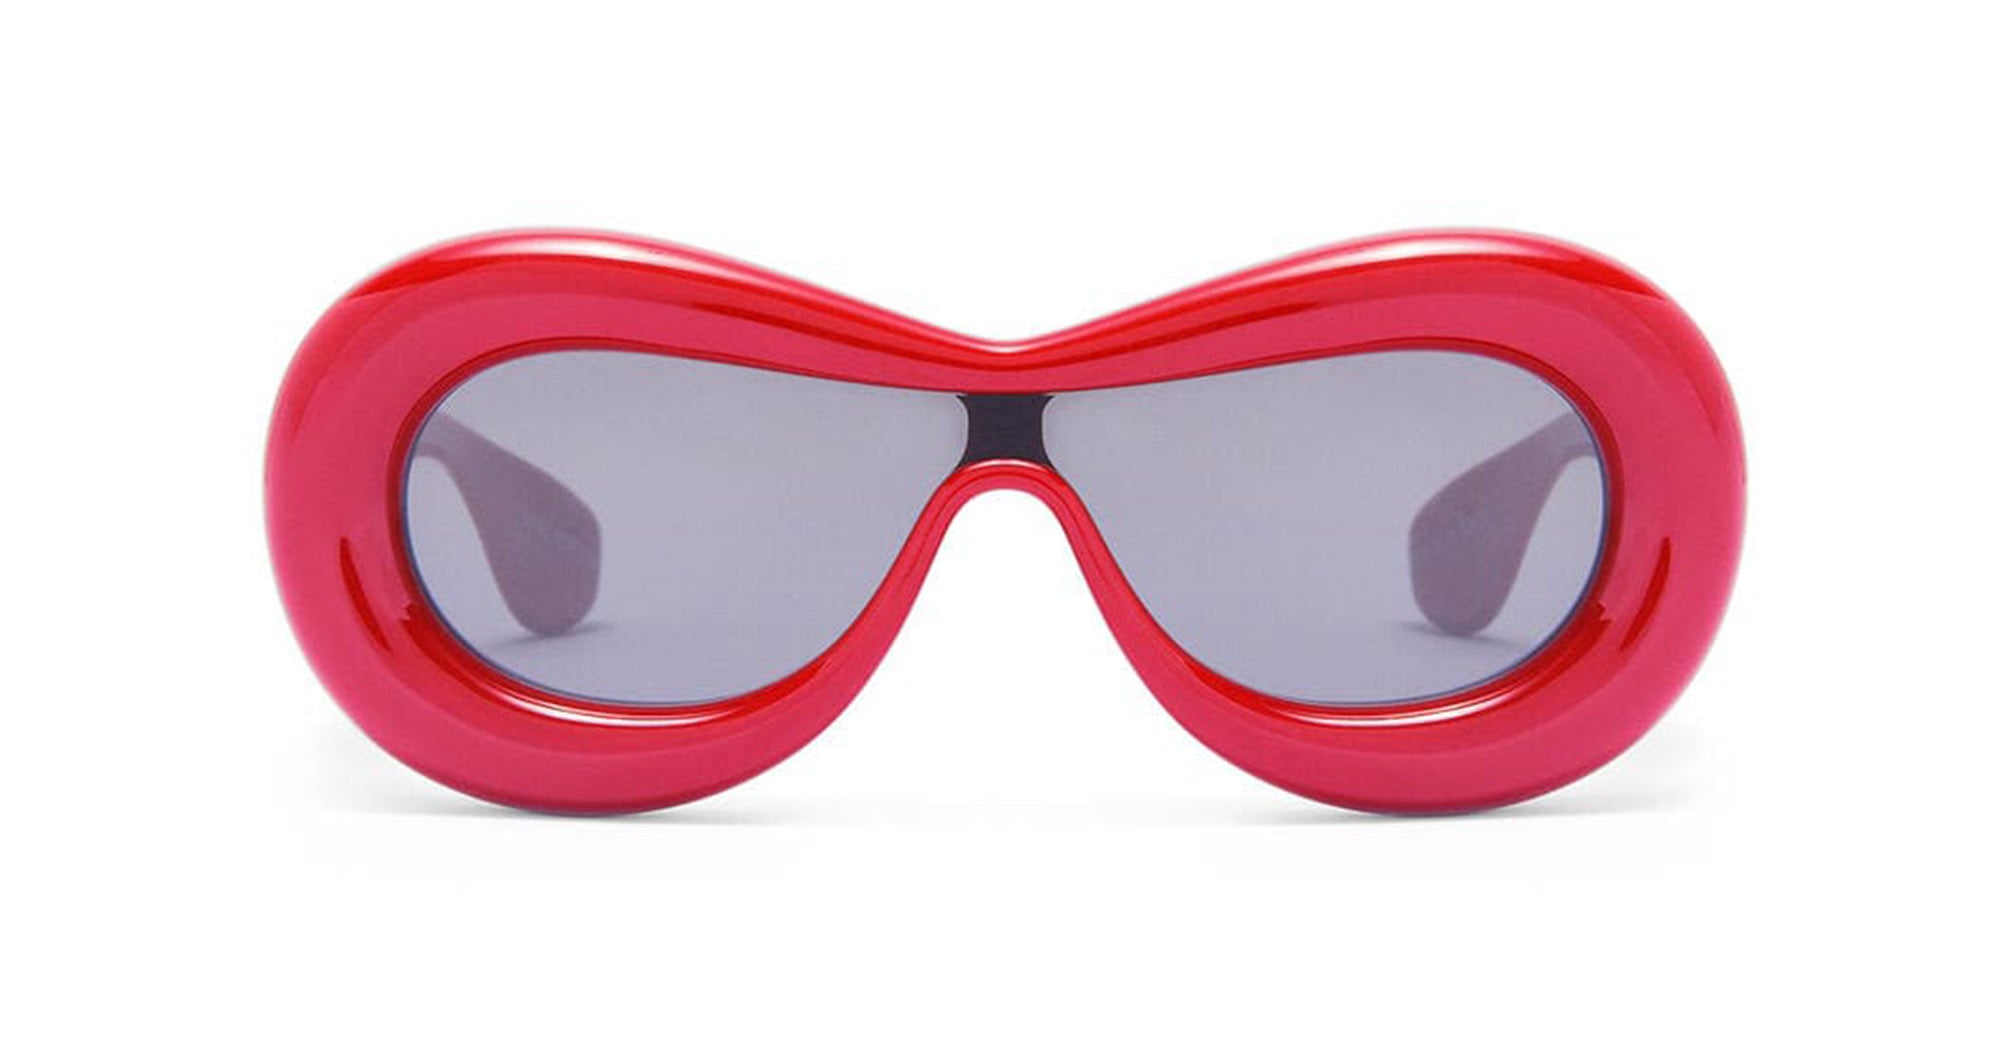 Loewe Red Inflated Mask Sunglasses